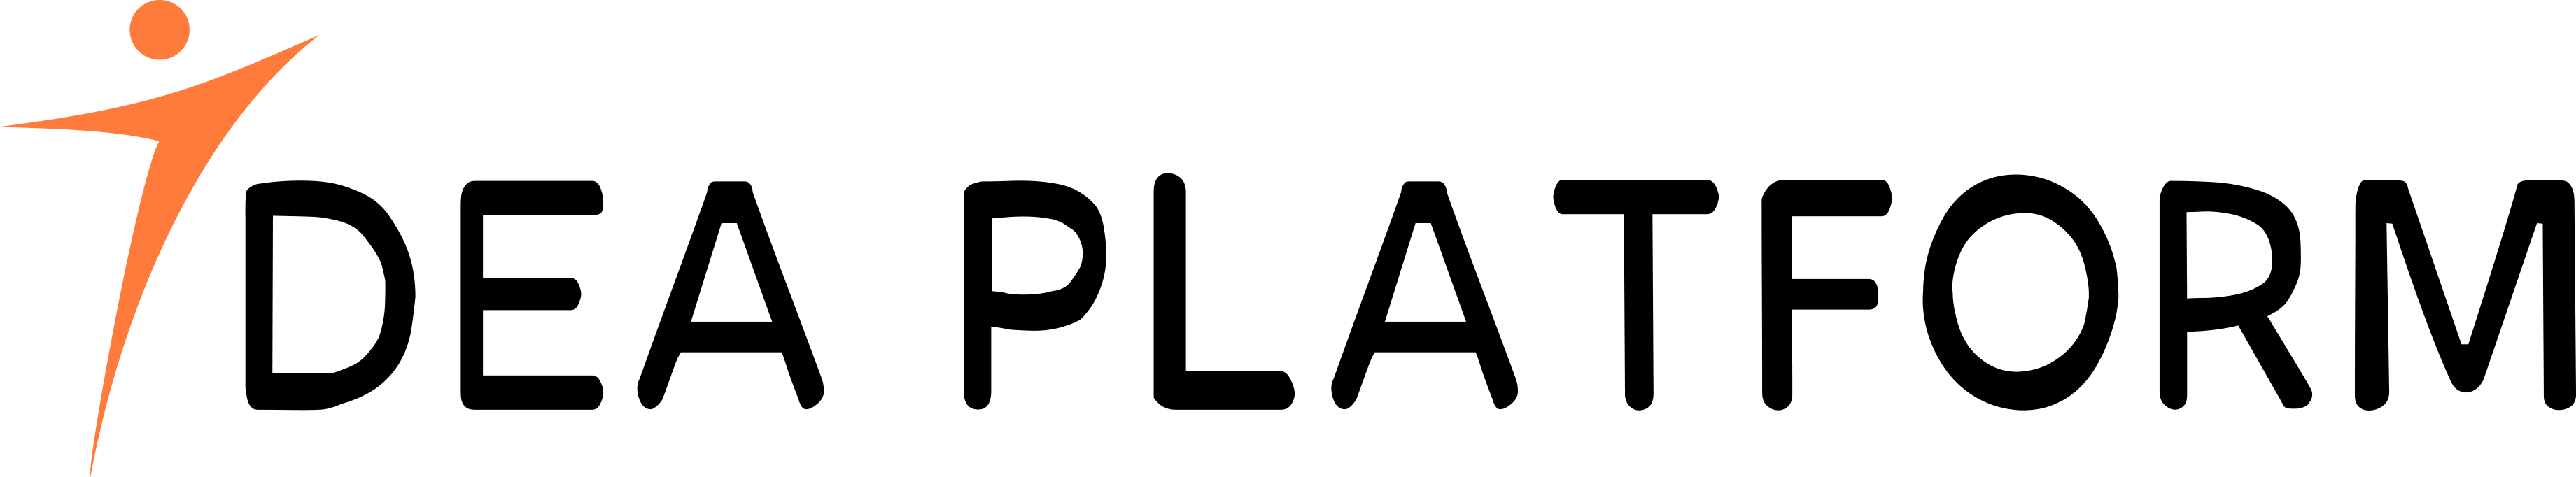 АйПи Консалтинг лого.png